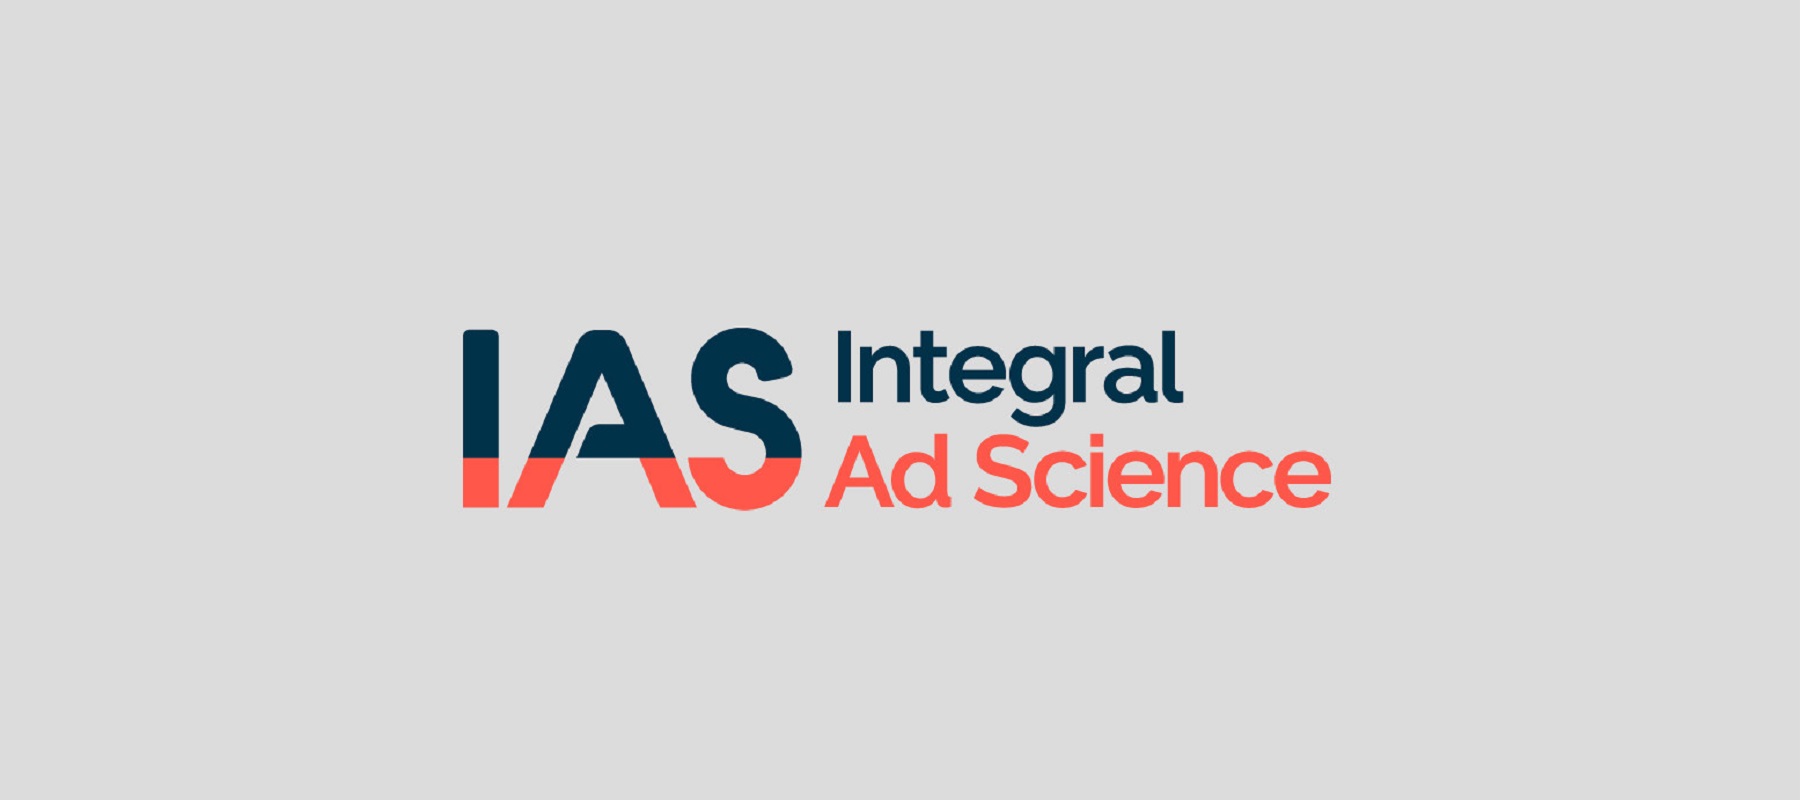 IAS announces industry-first deepfake measurement capabilities